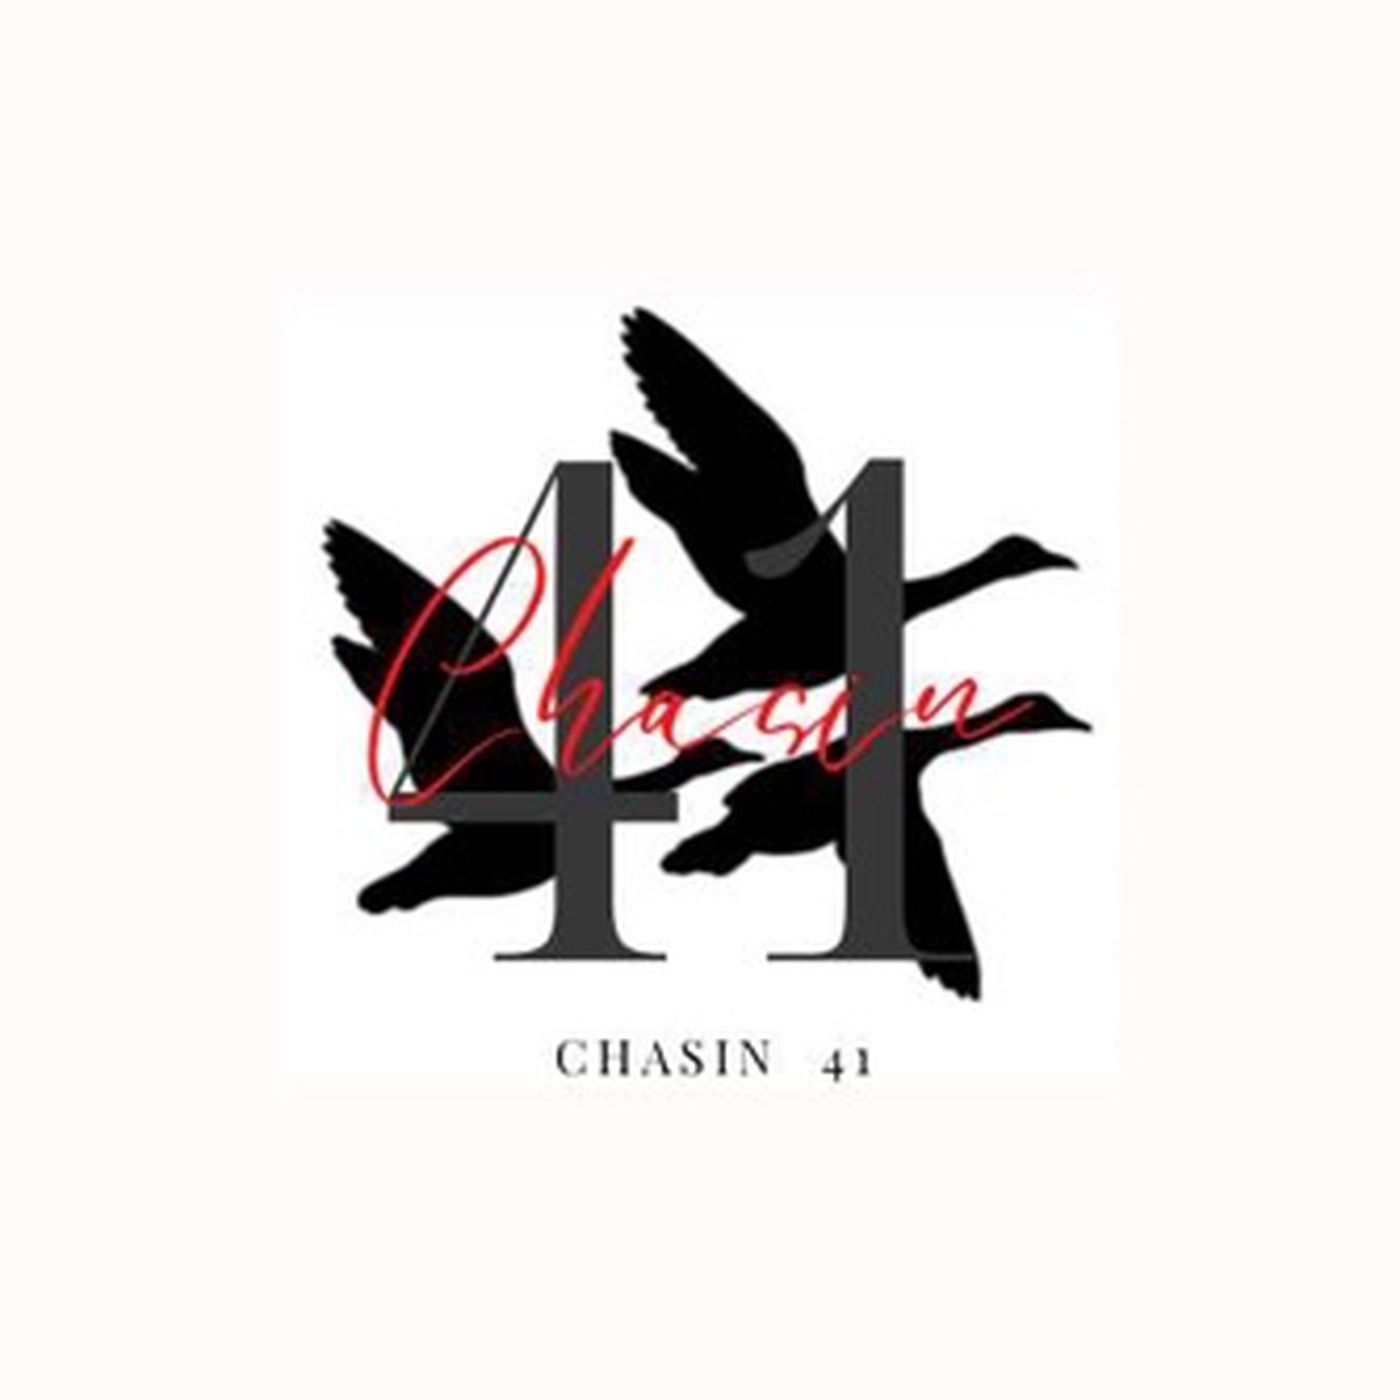 Chasin 41